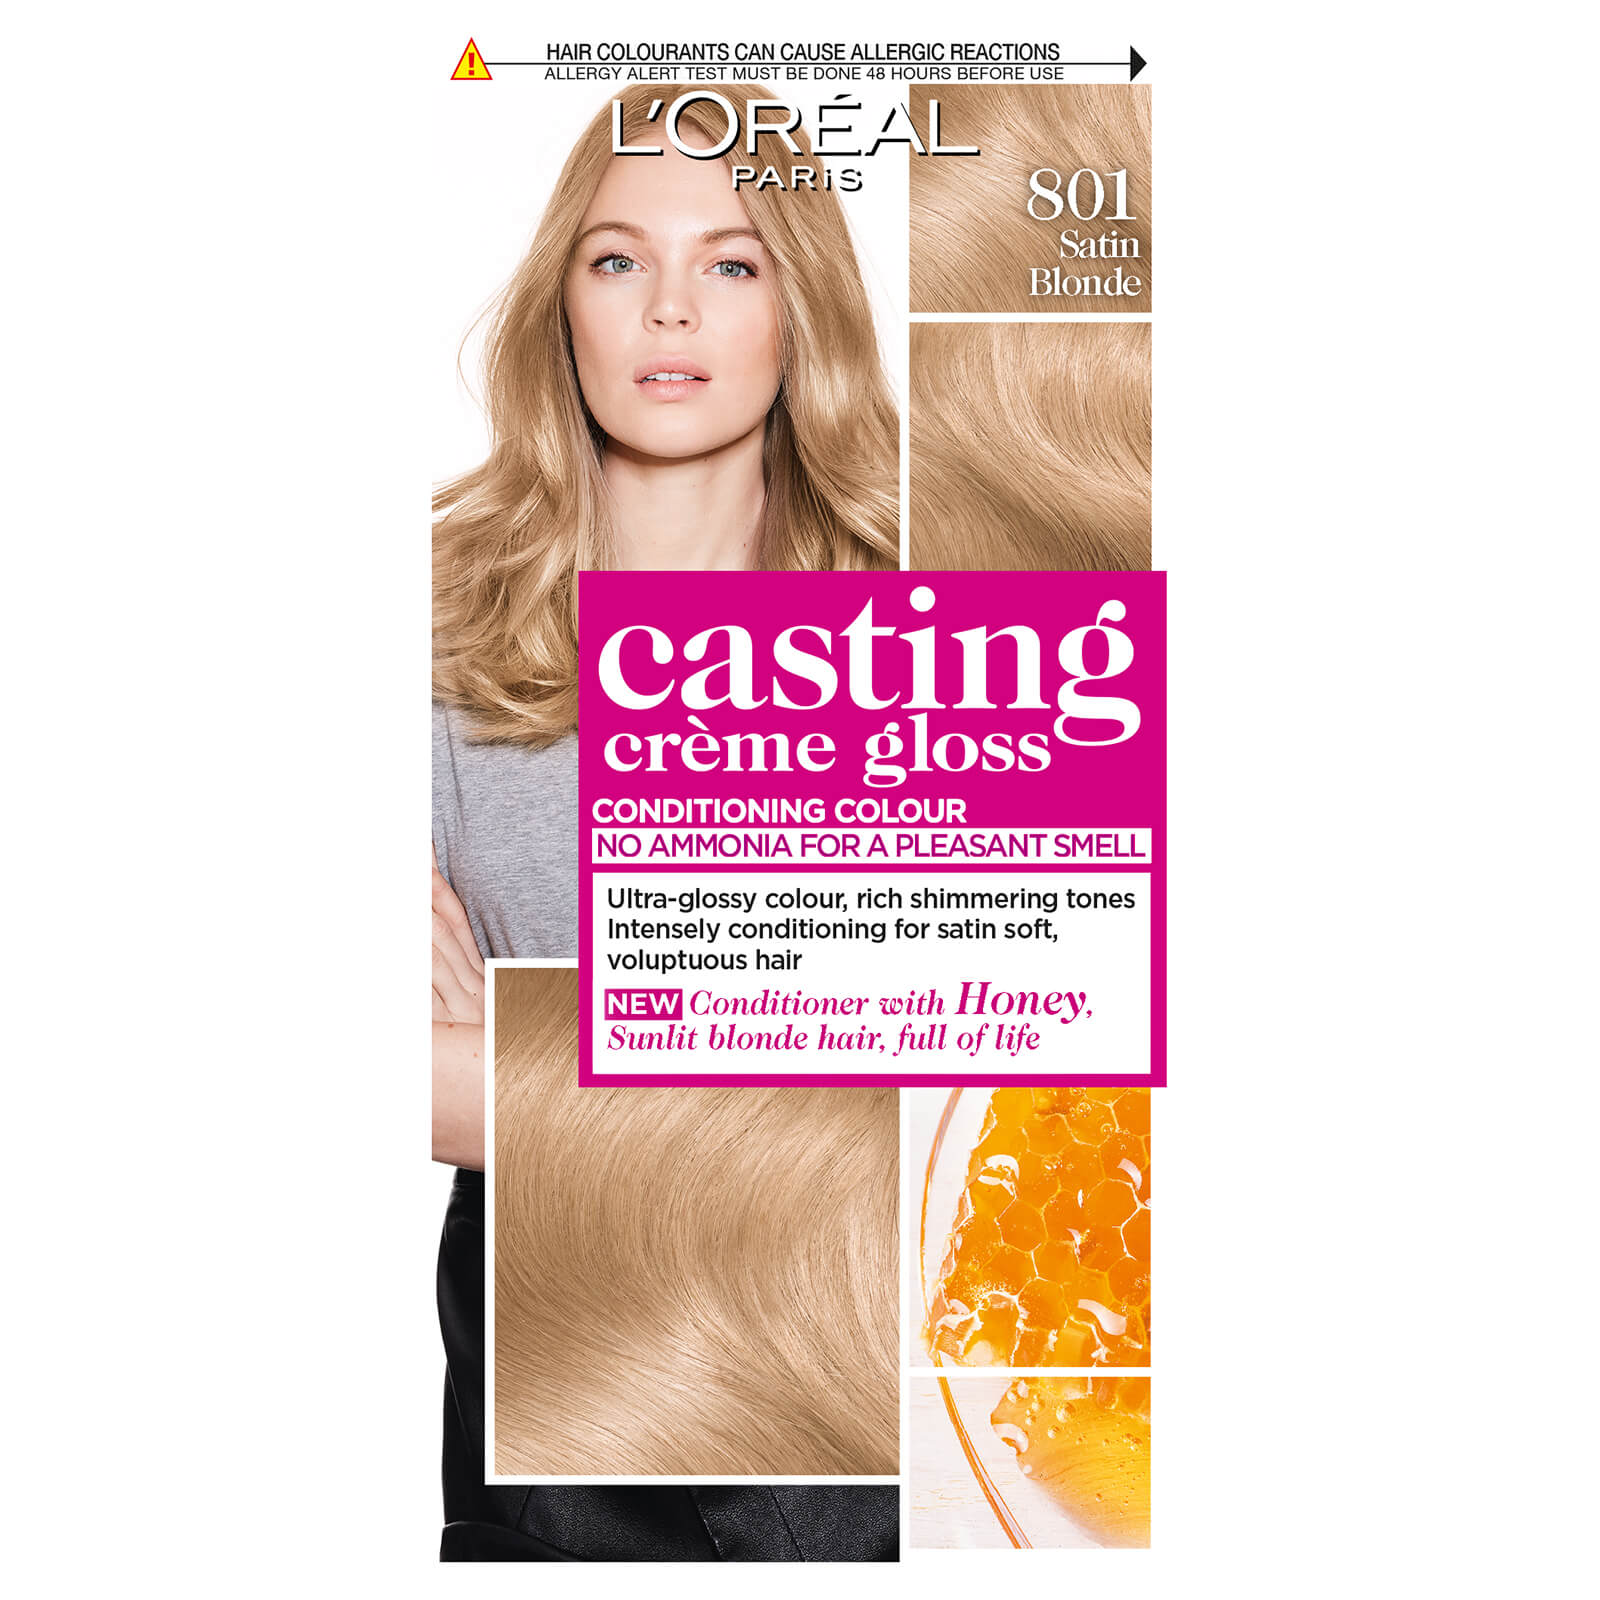 L'Oreal Paris Casting Creme Gloss Semi-Permanent Hair Dye (Various Shades) - 801 Satin Blonde